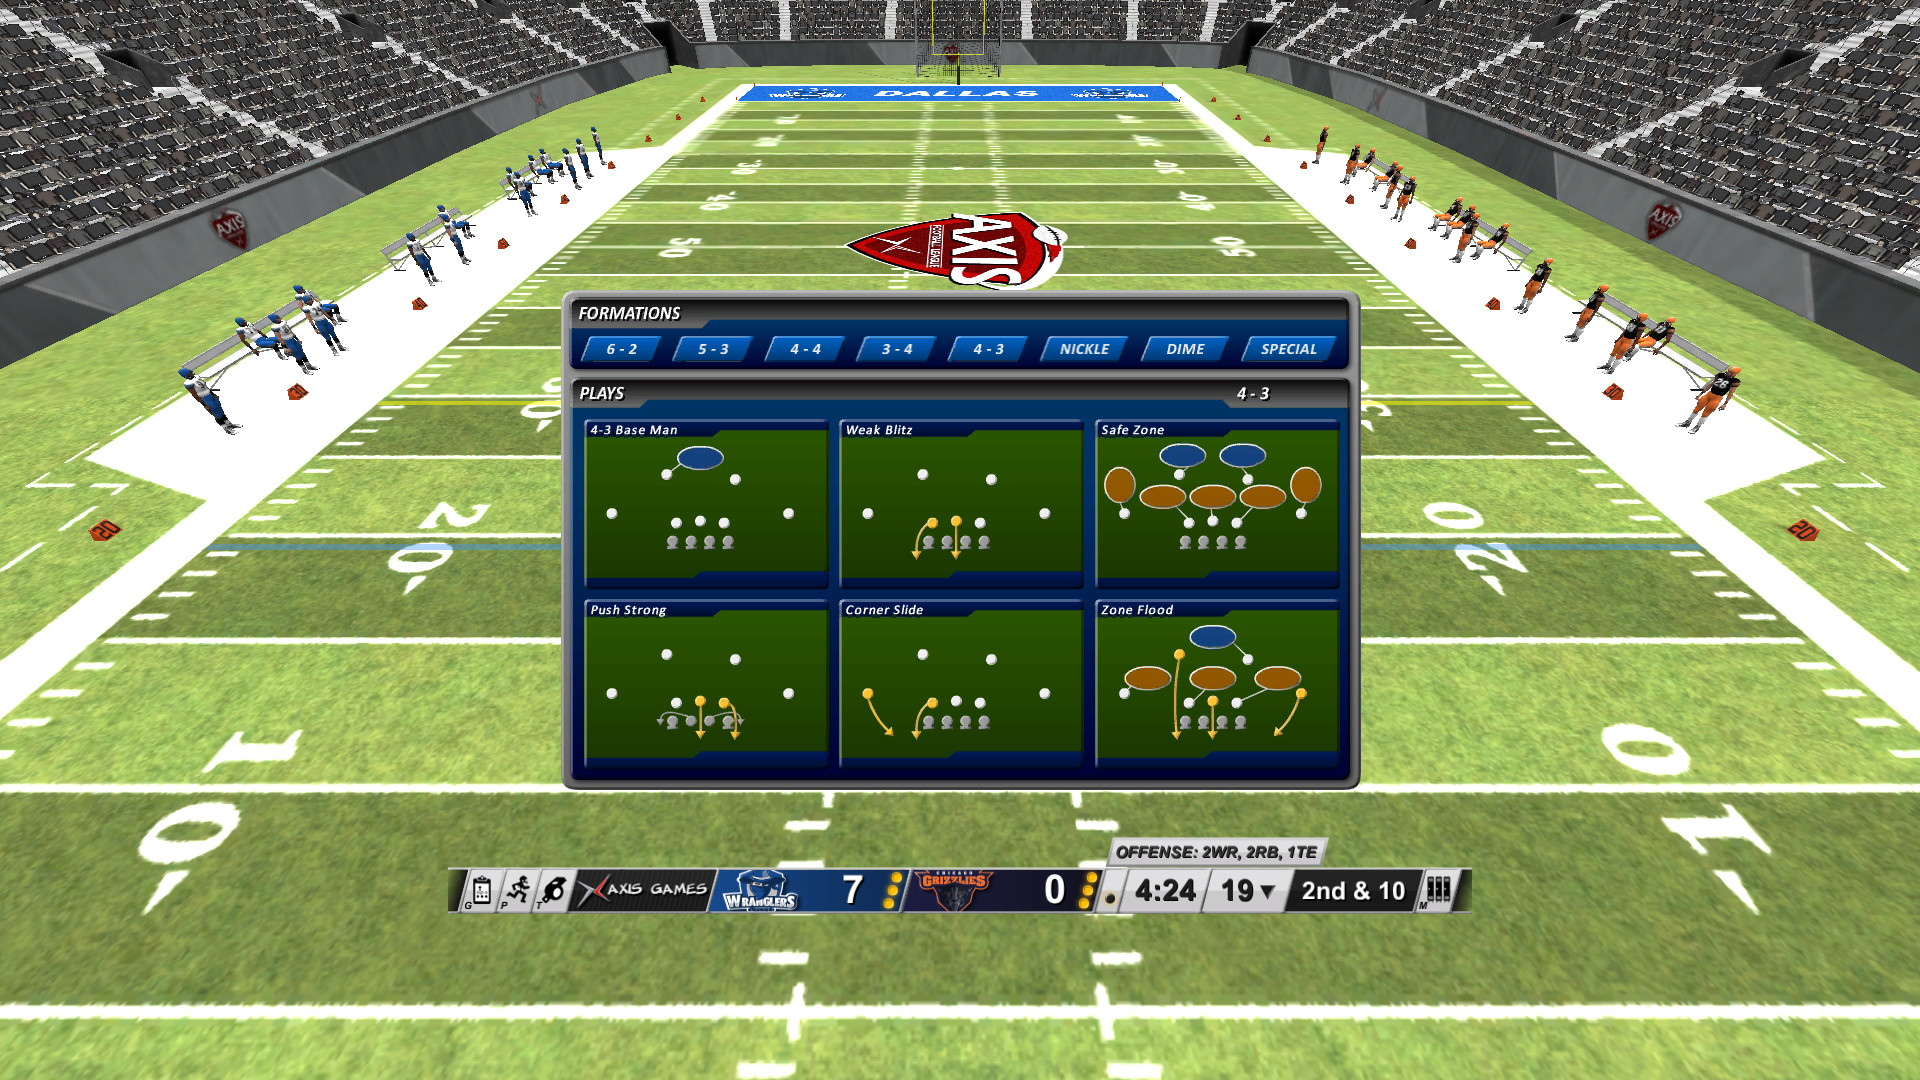 Axis Football 2015 screenshot